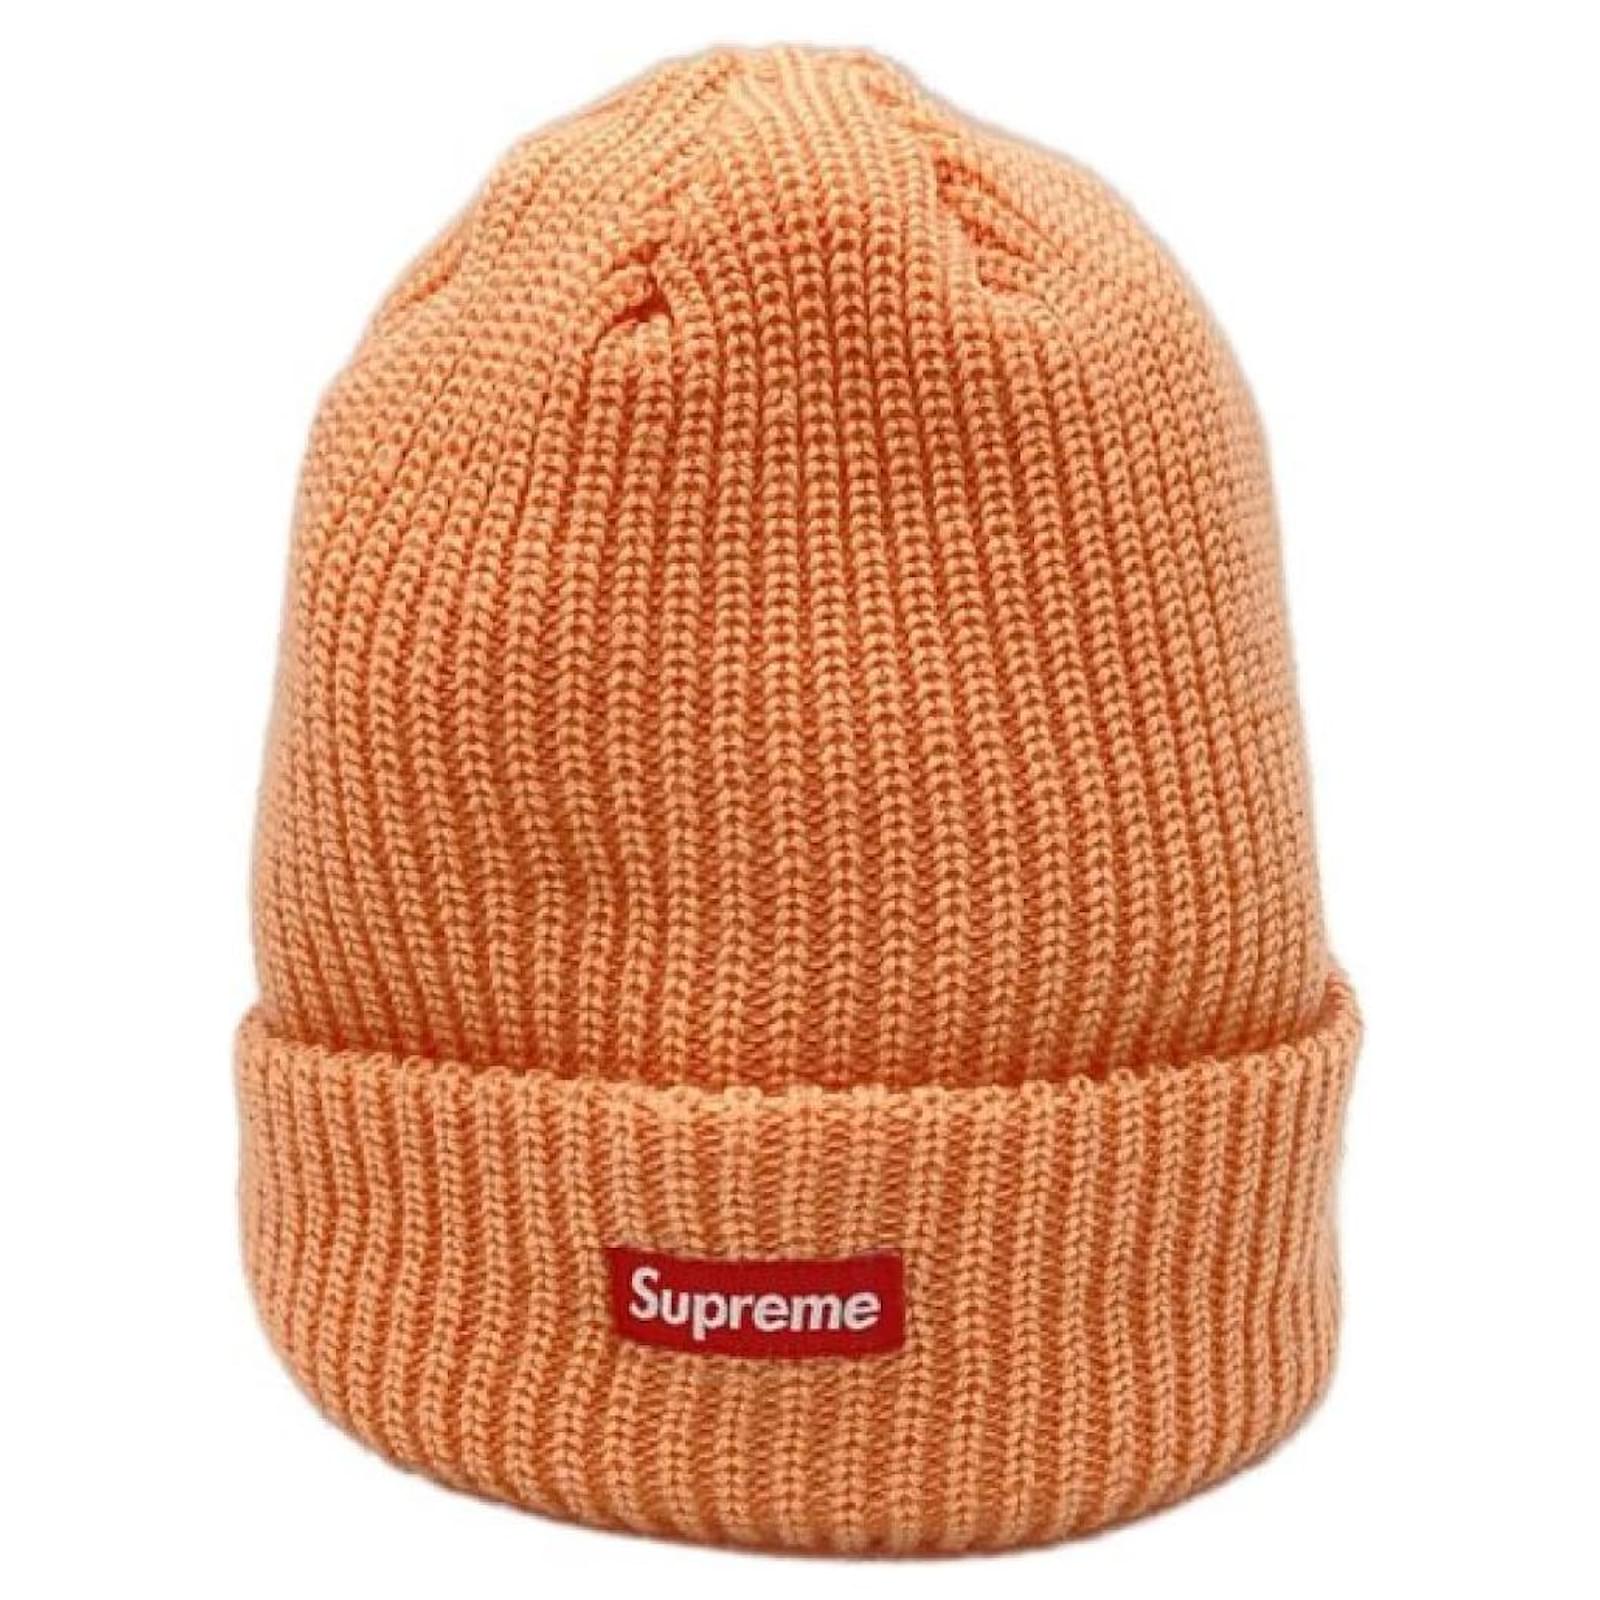 SUPREME (Supreme) small box logo beanie small box logo beanie knit